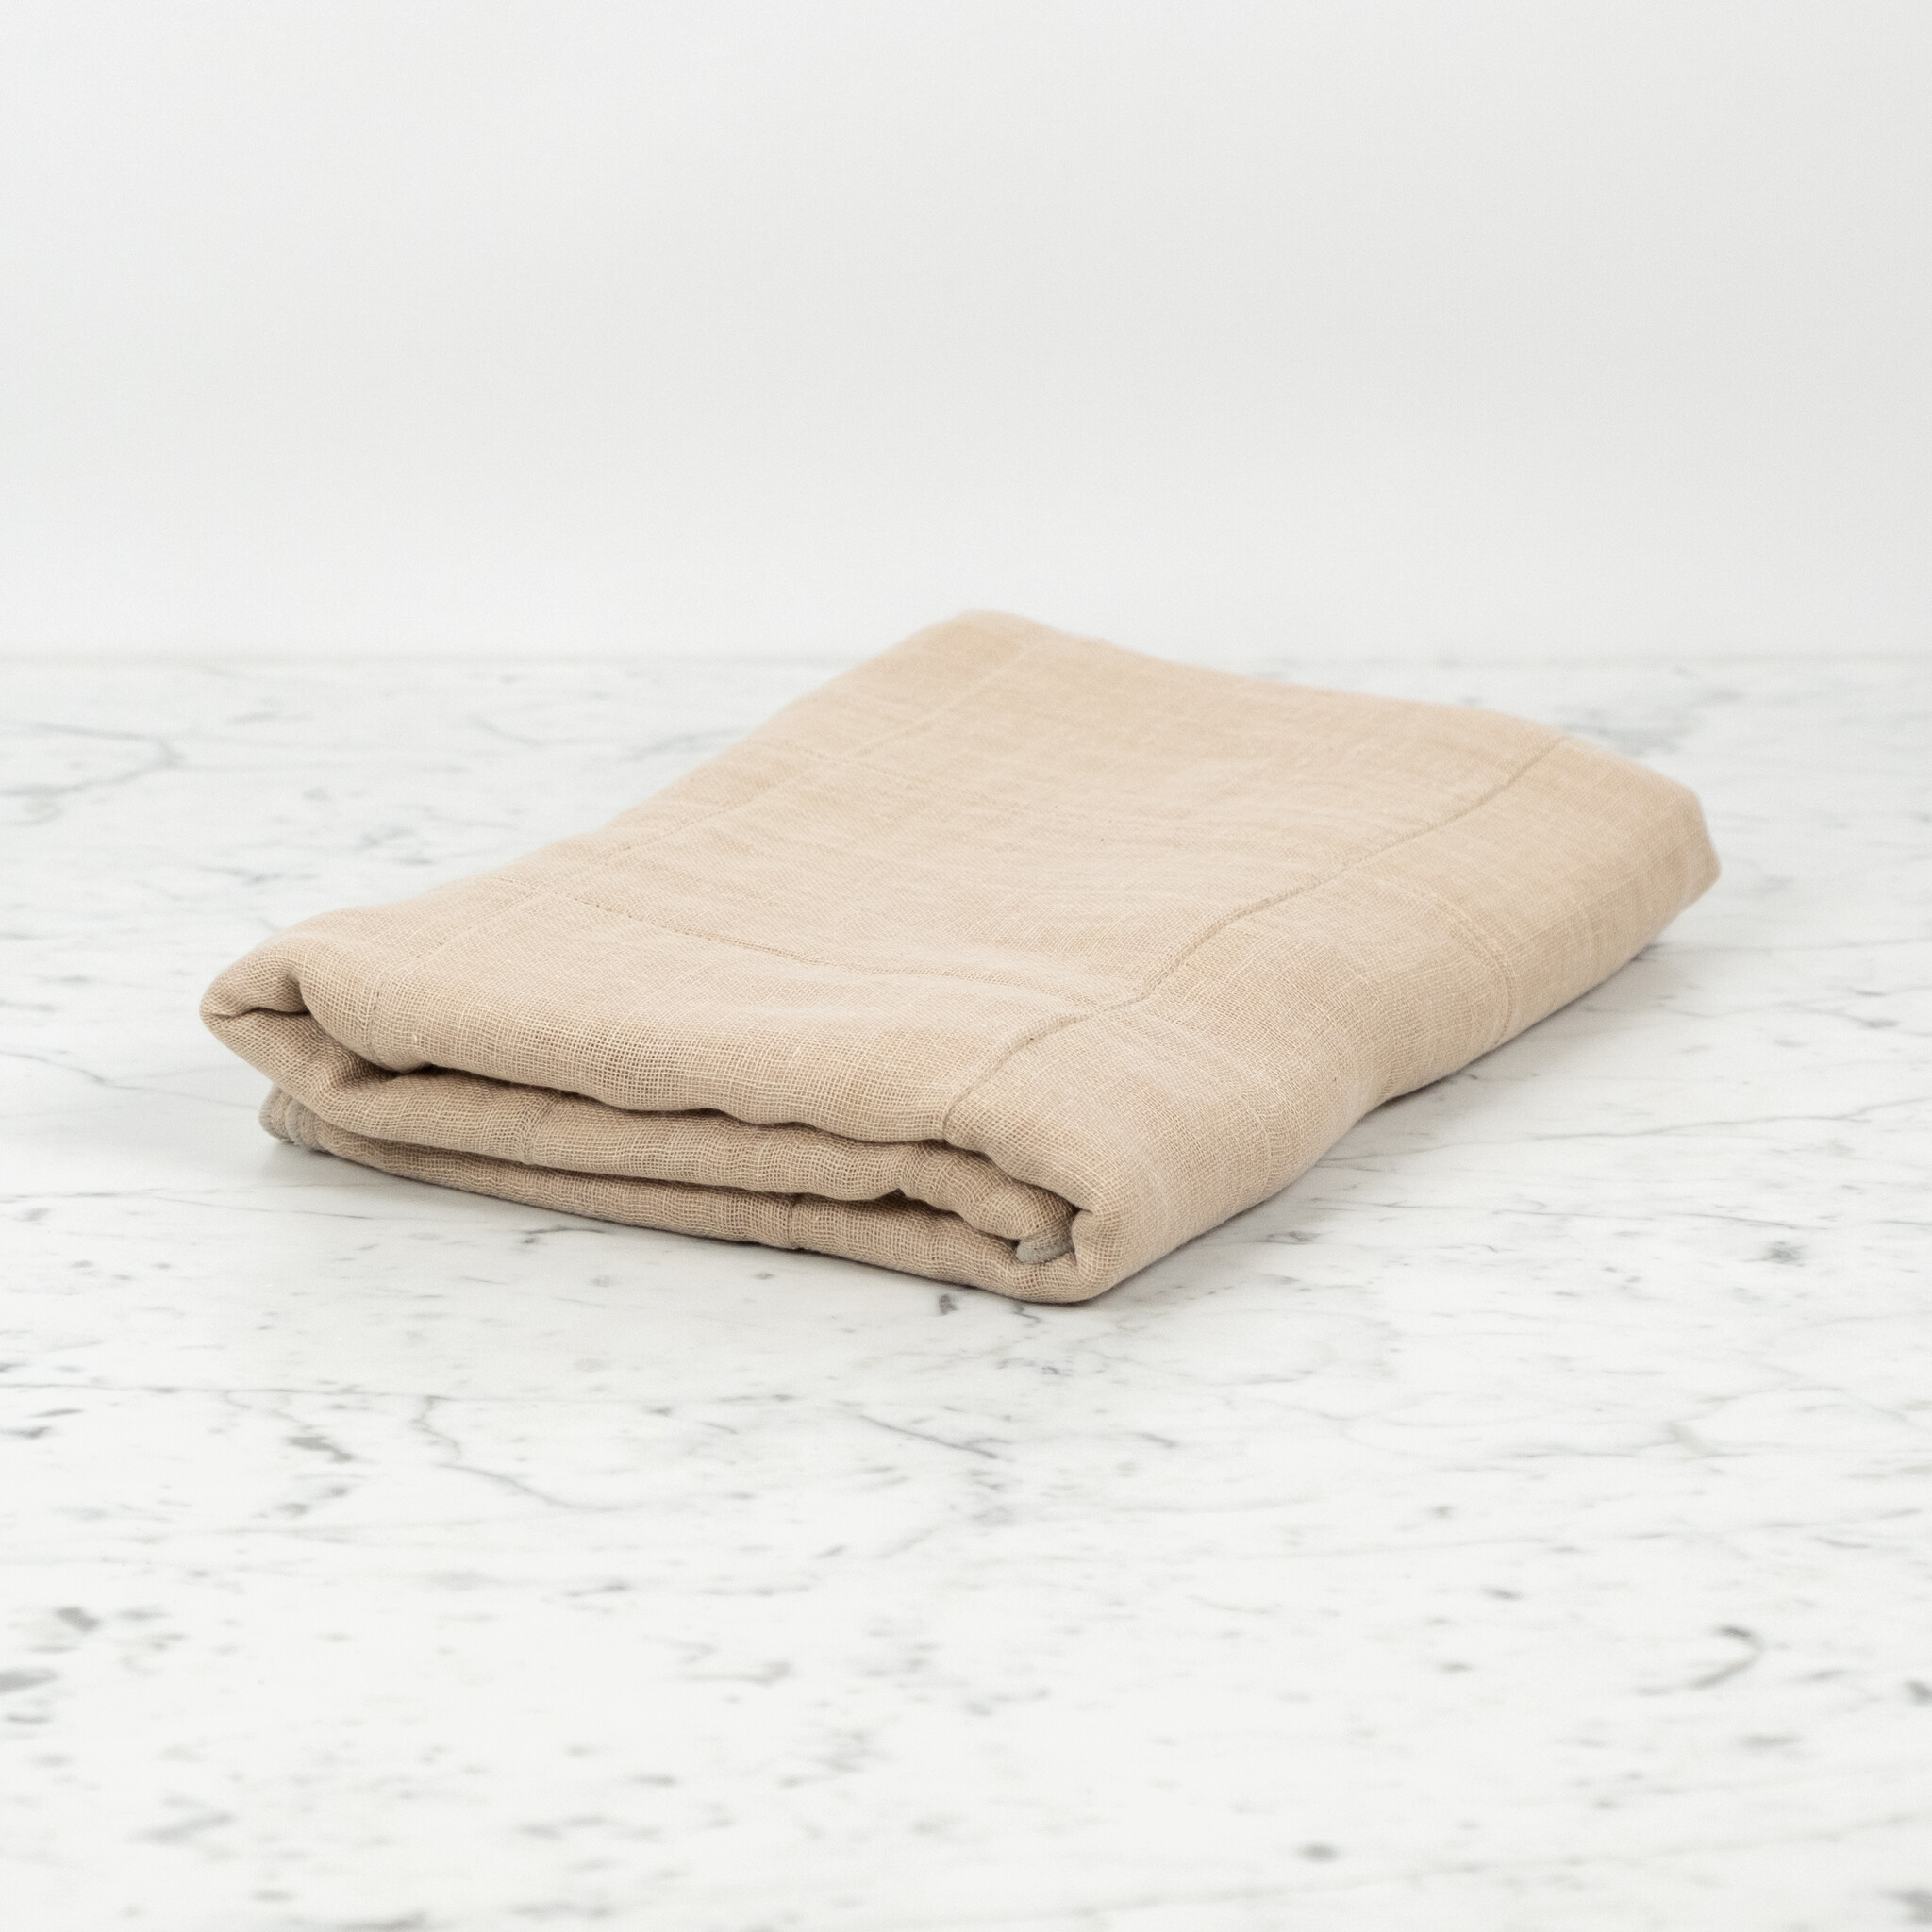 Japanese Organic 6 Layer Cotton Gauze Bath Towel - Persimmon - 50" x 26"